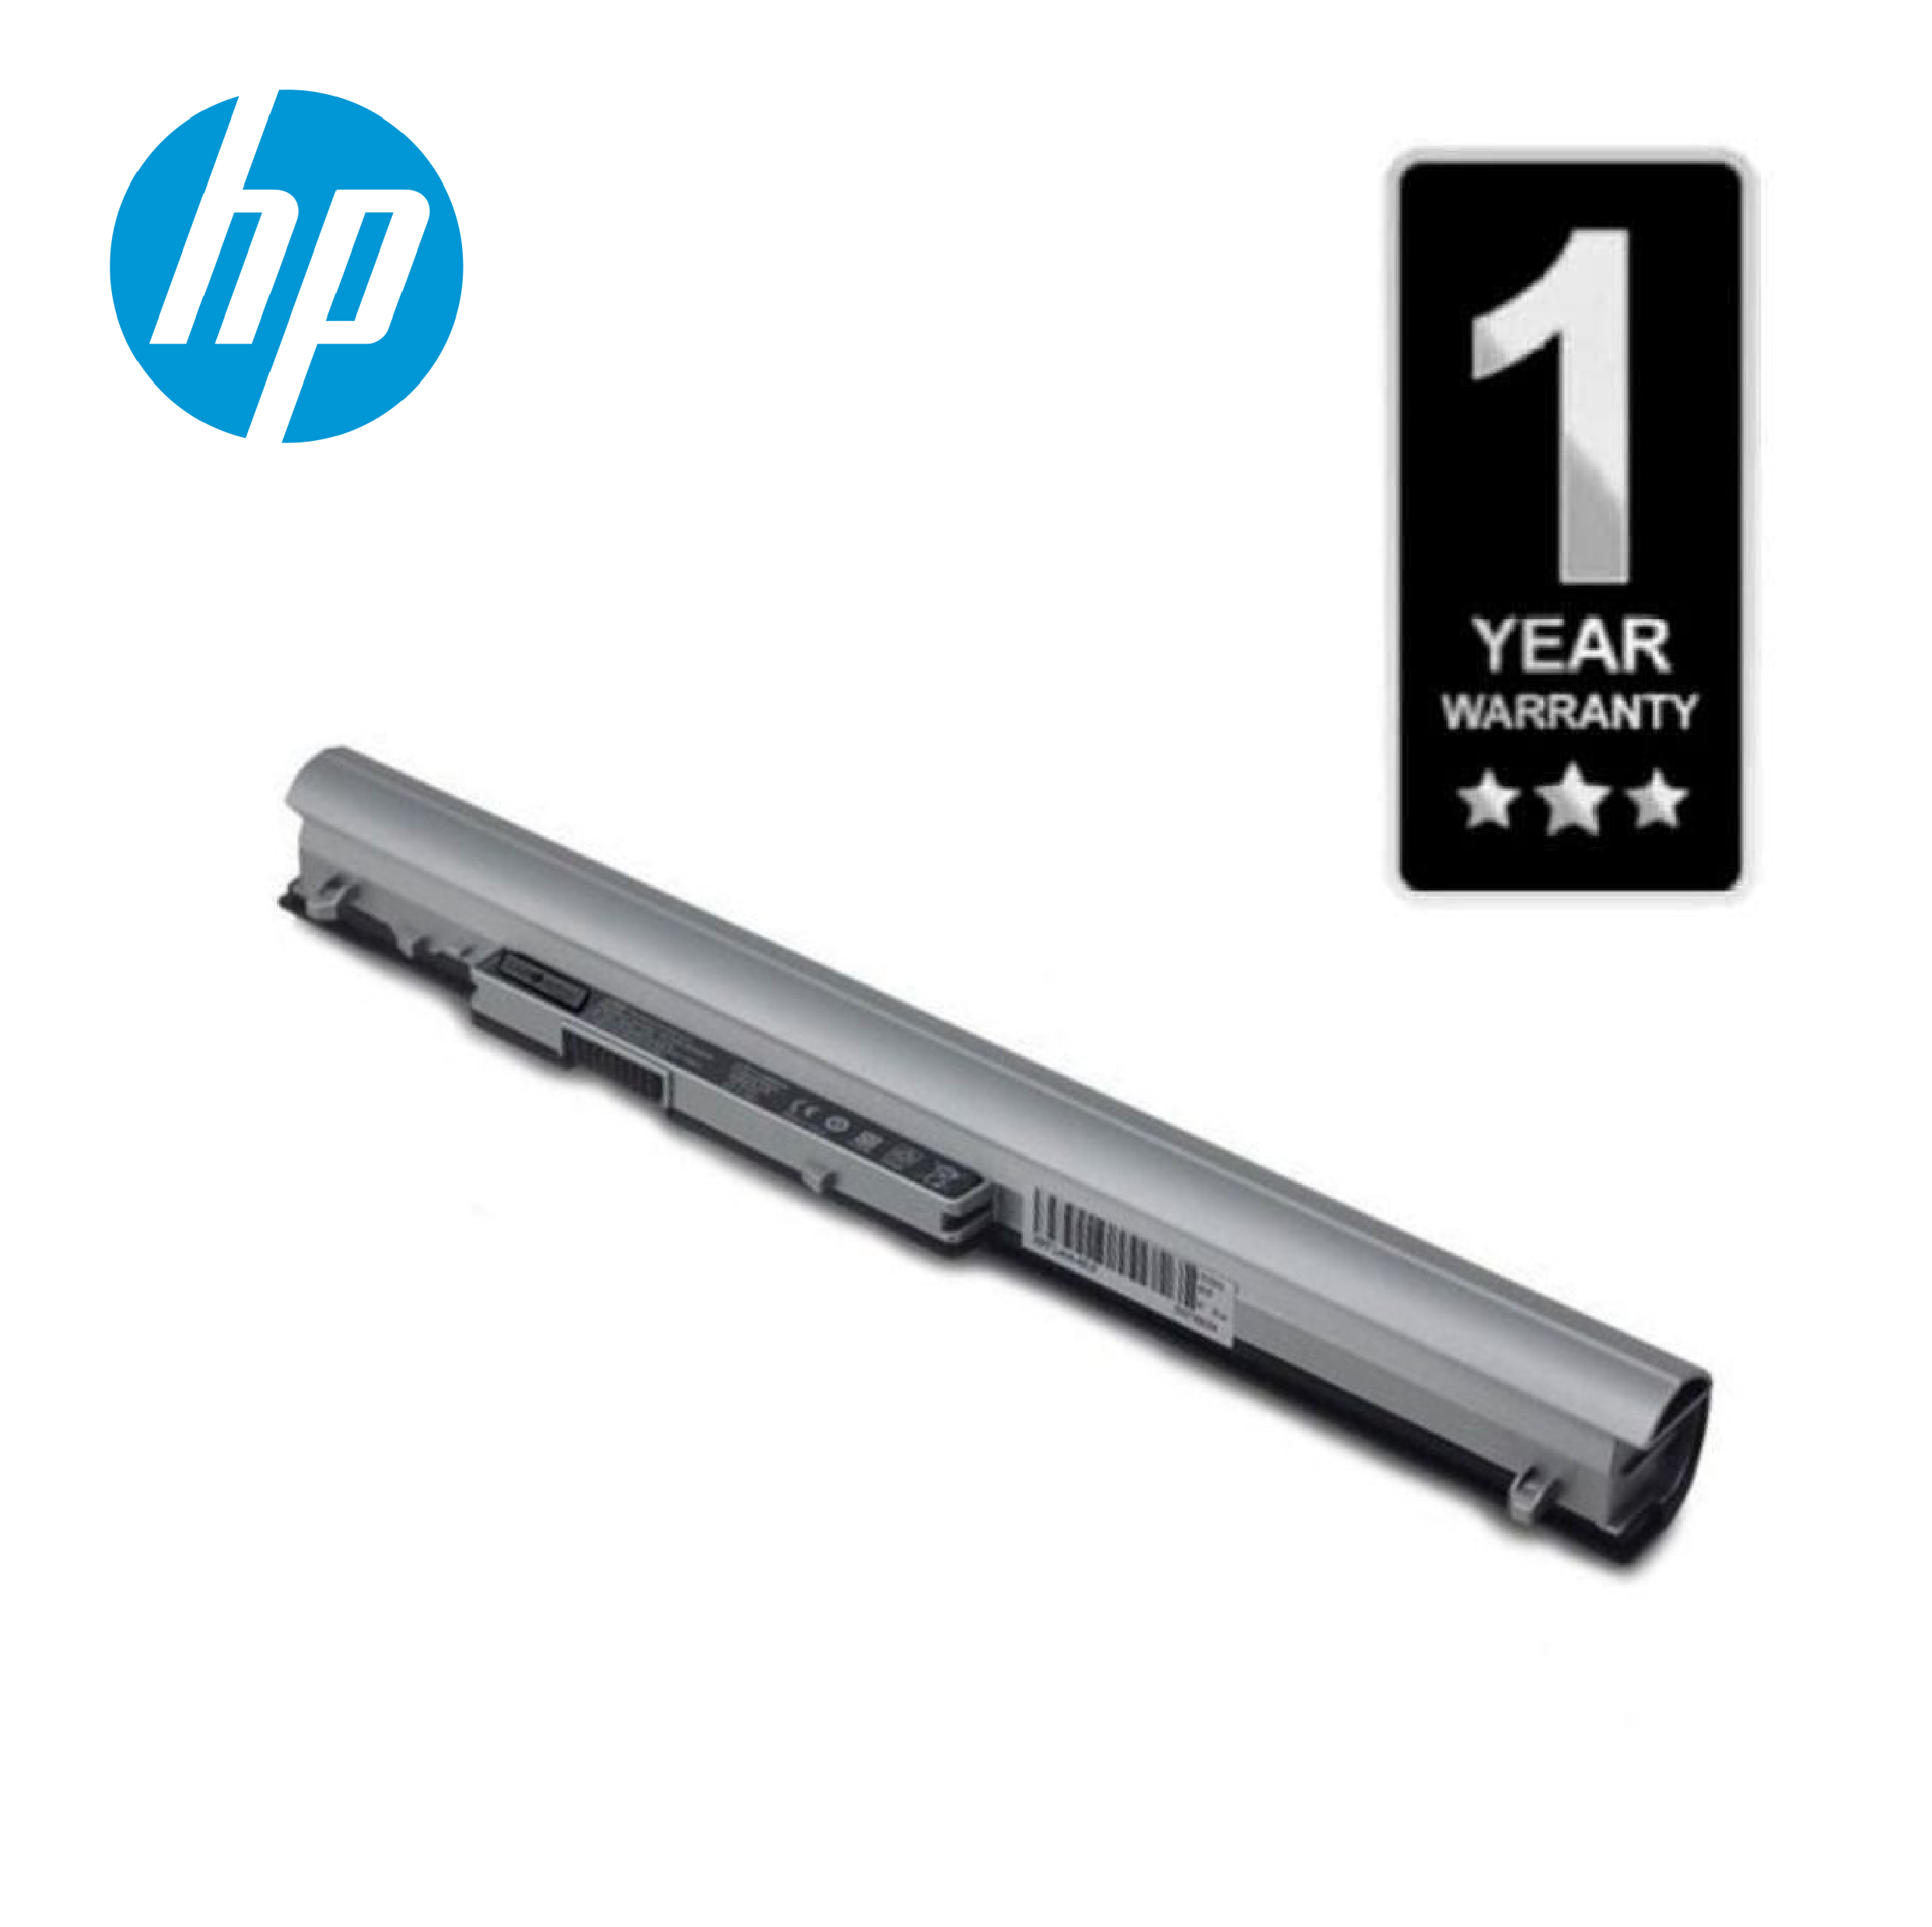 HP laptop battery.